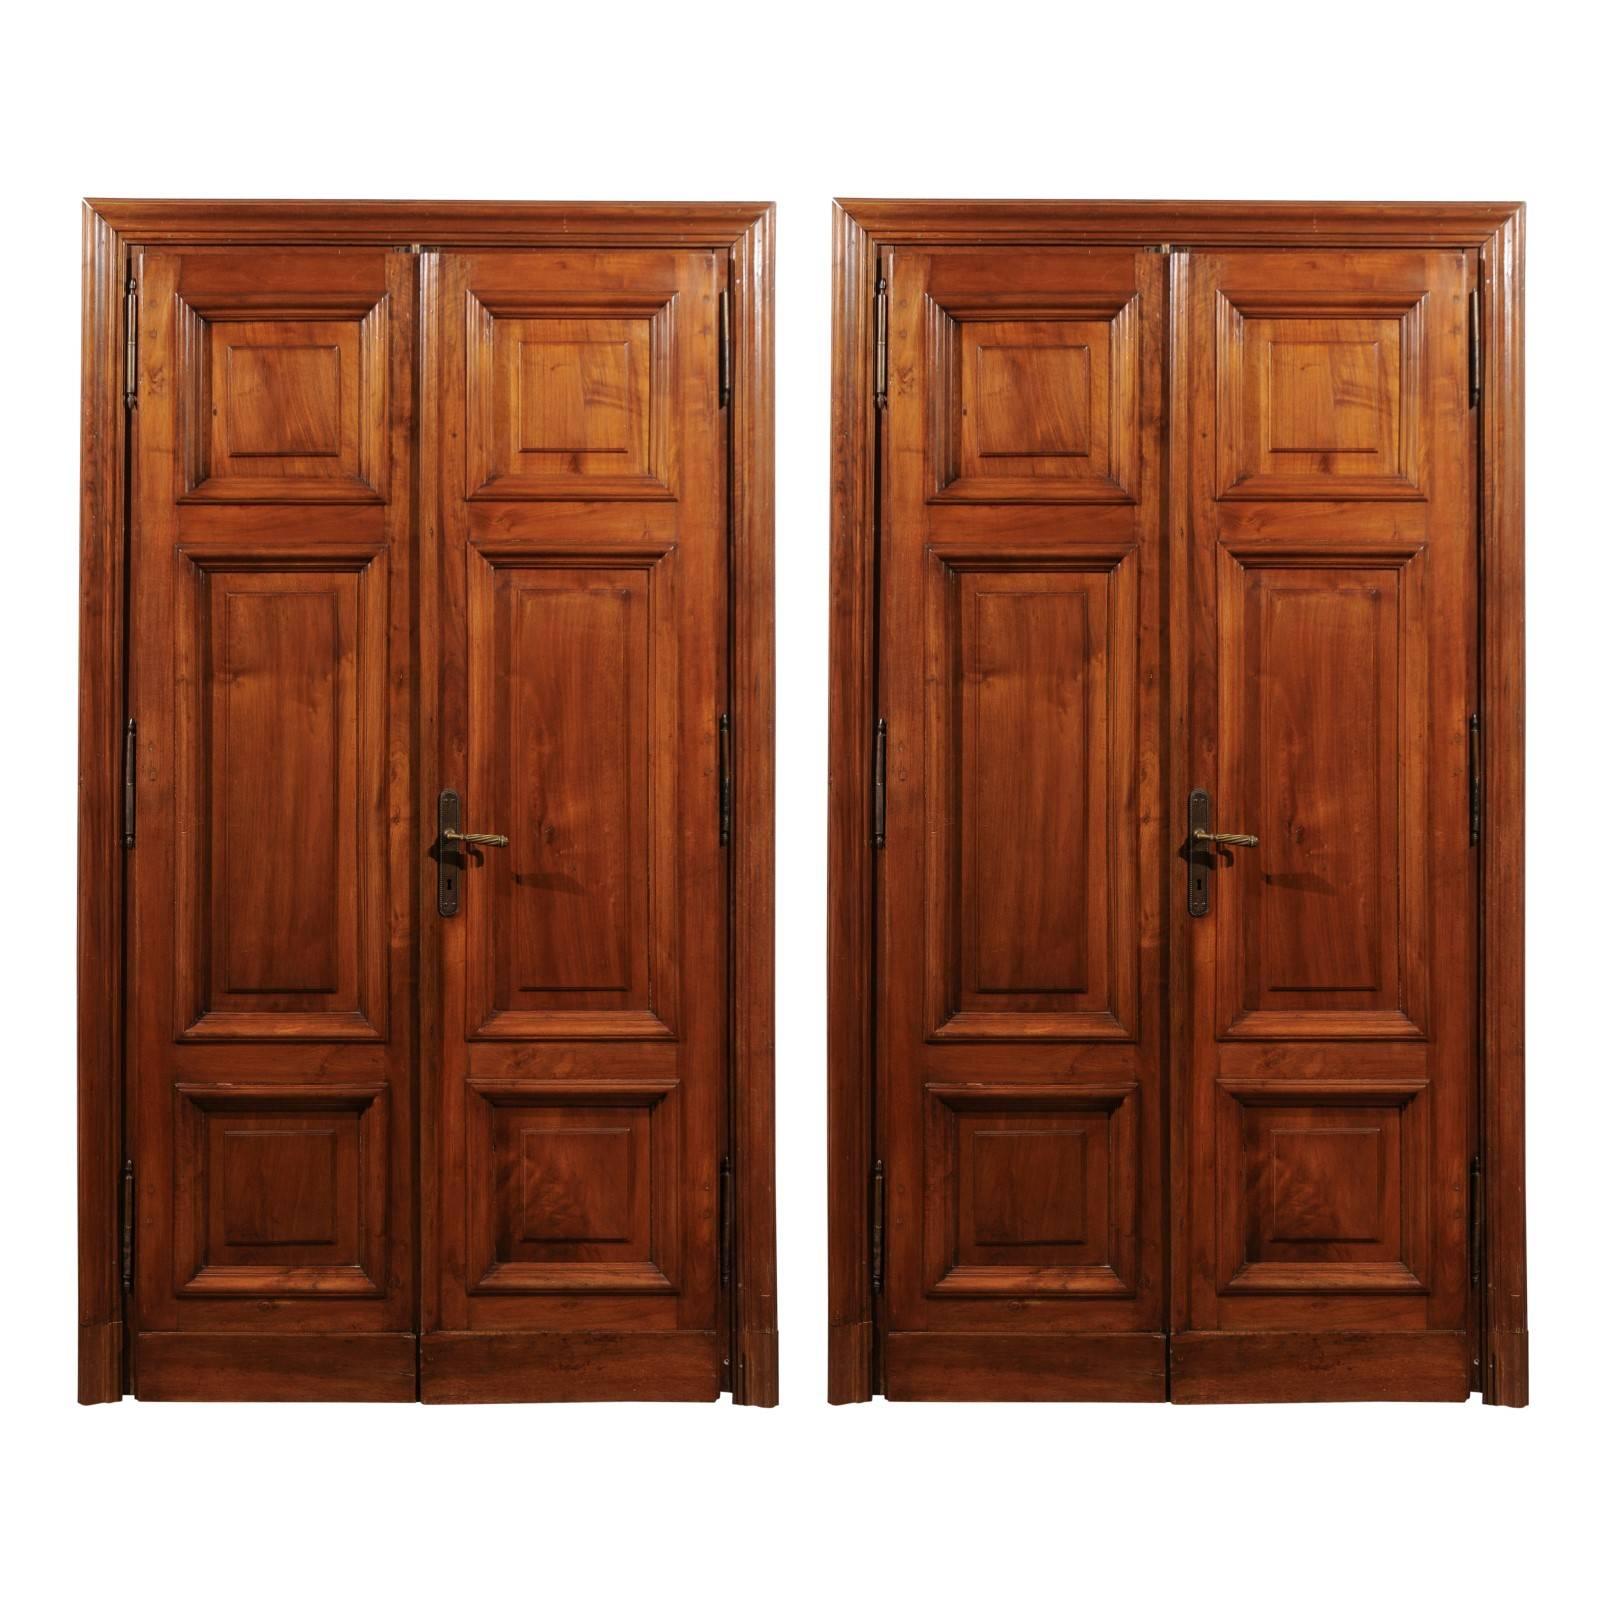 Pair of Italian Walnut Paneled Double Doors, circa 1870 with Custom Surround